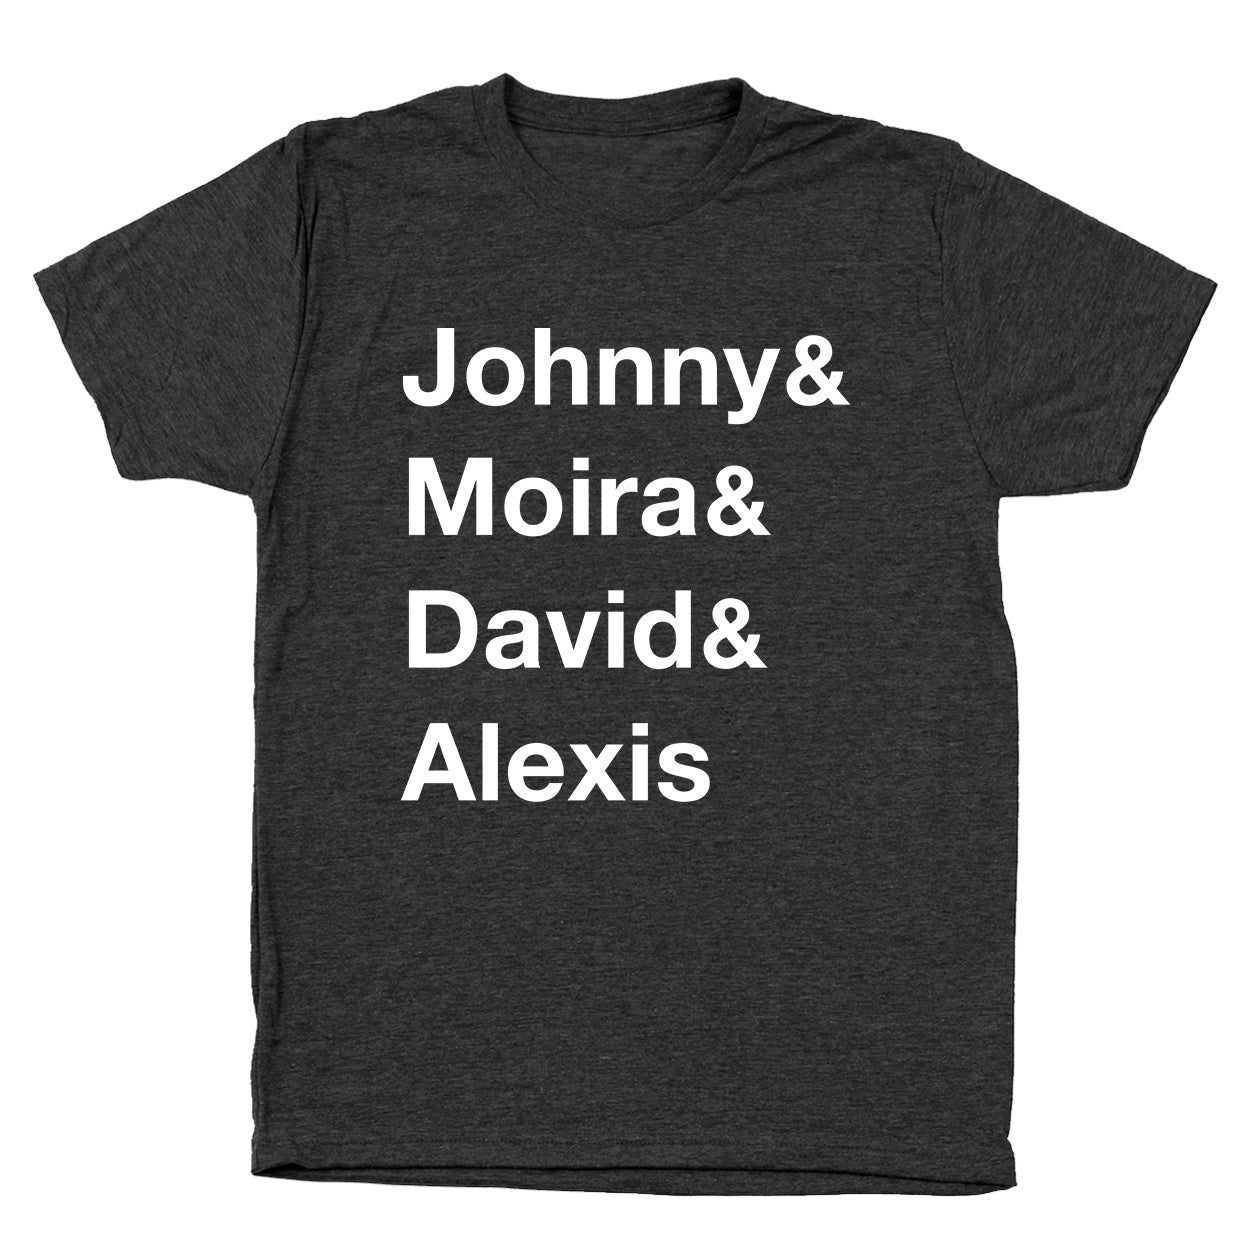 Johnny & Moira & David & Alexis Tshirt - Donkey Tees